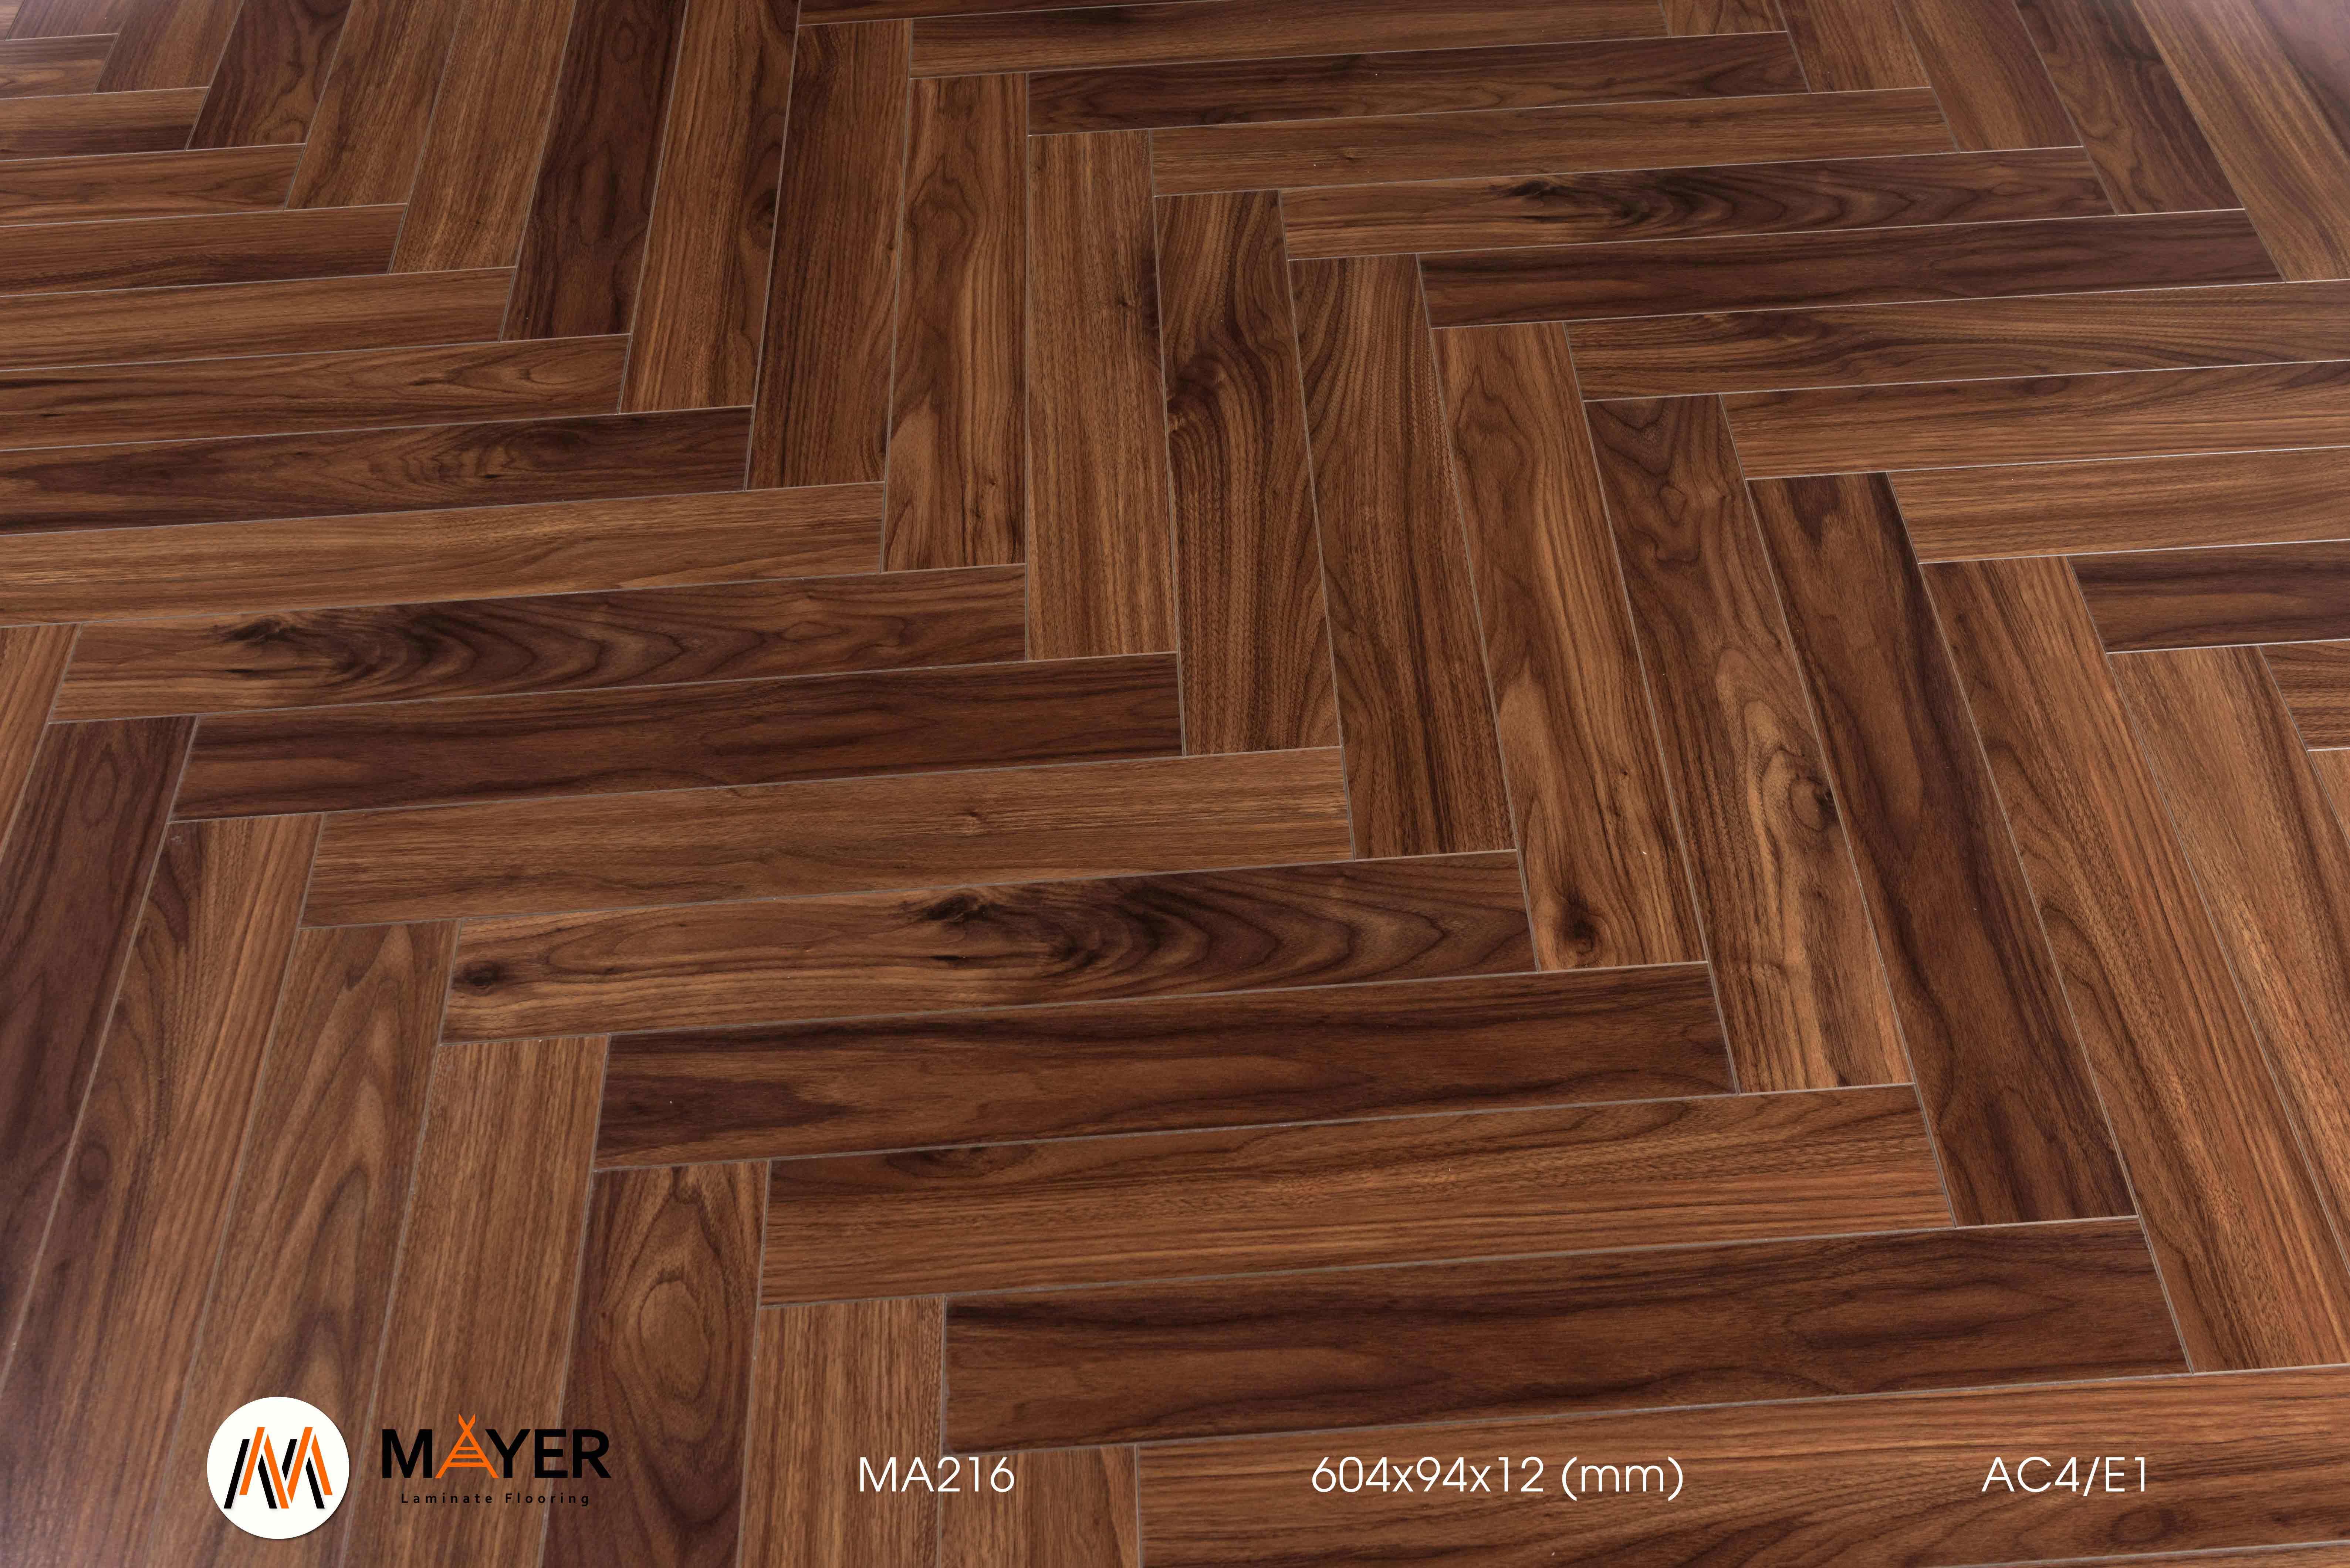 Sàn gỗ Mayer Xương Cá MA216